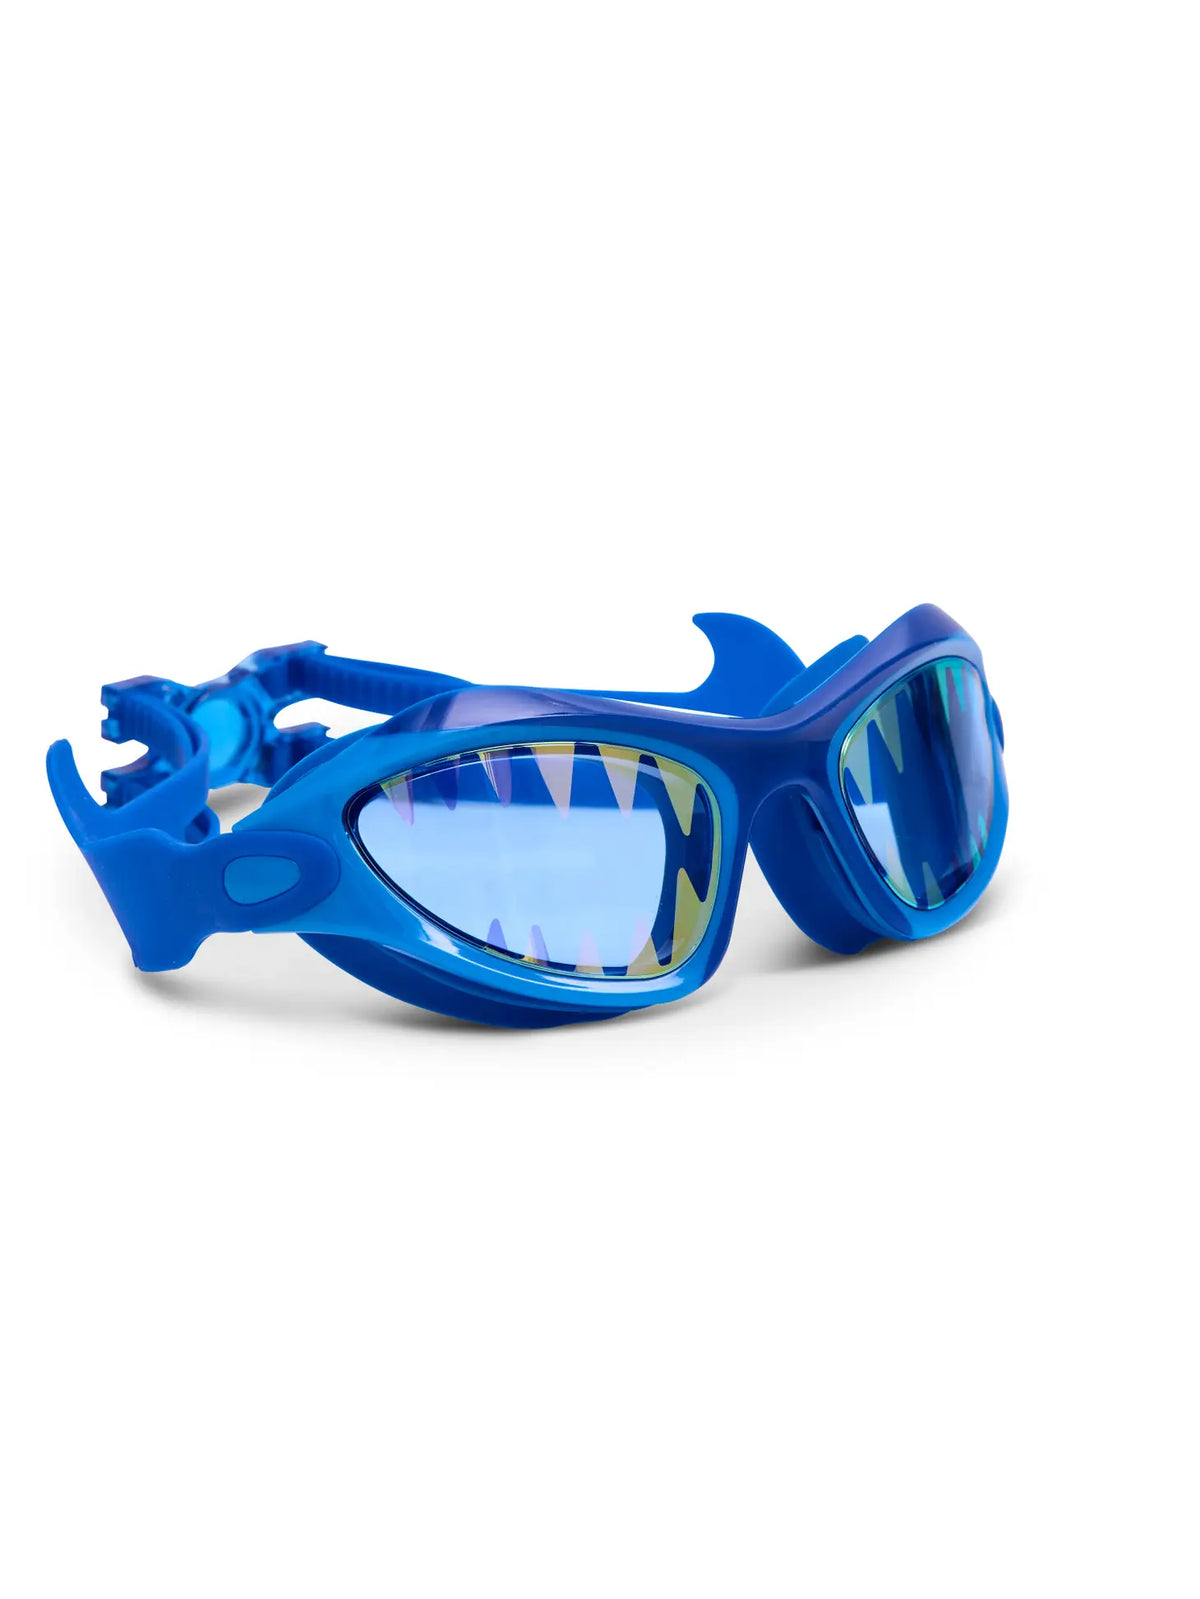 Megamouth Shark Goggles Cover